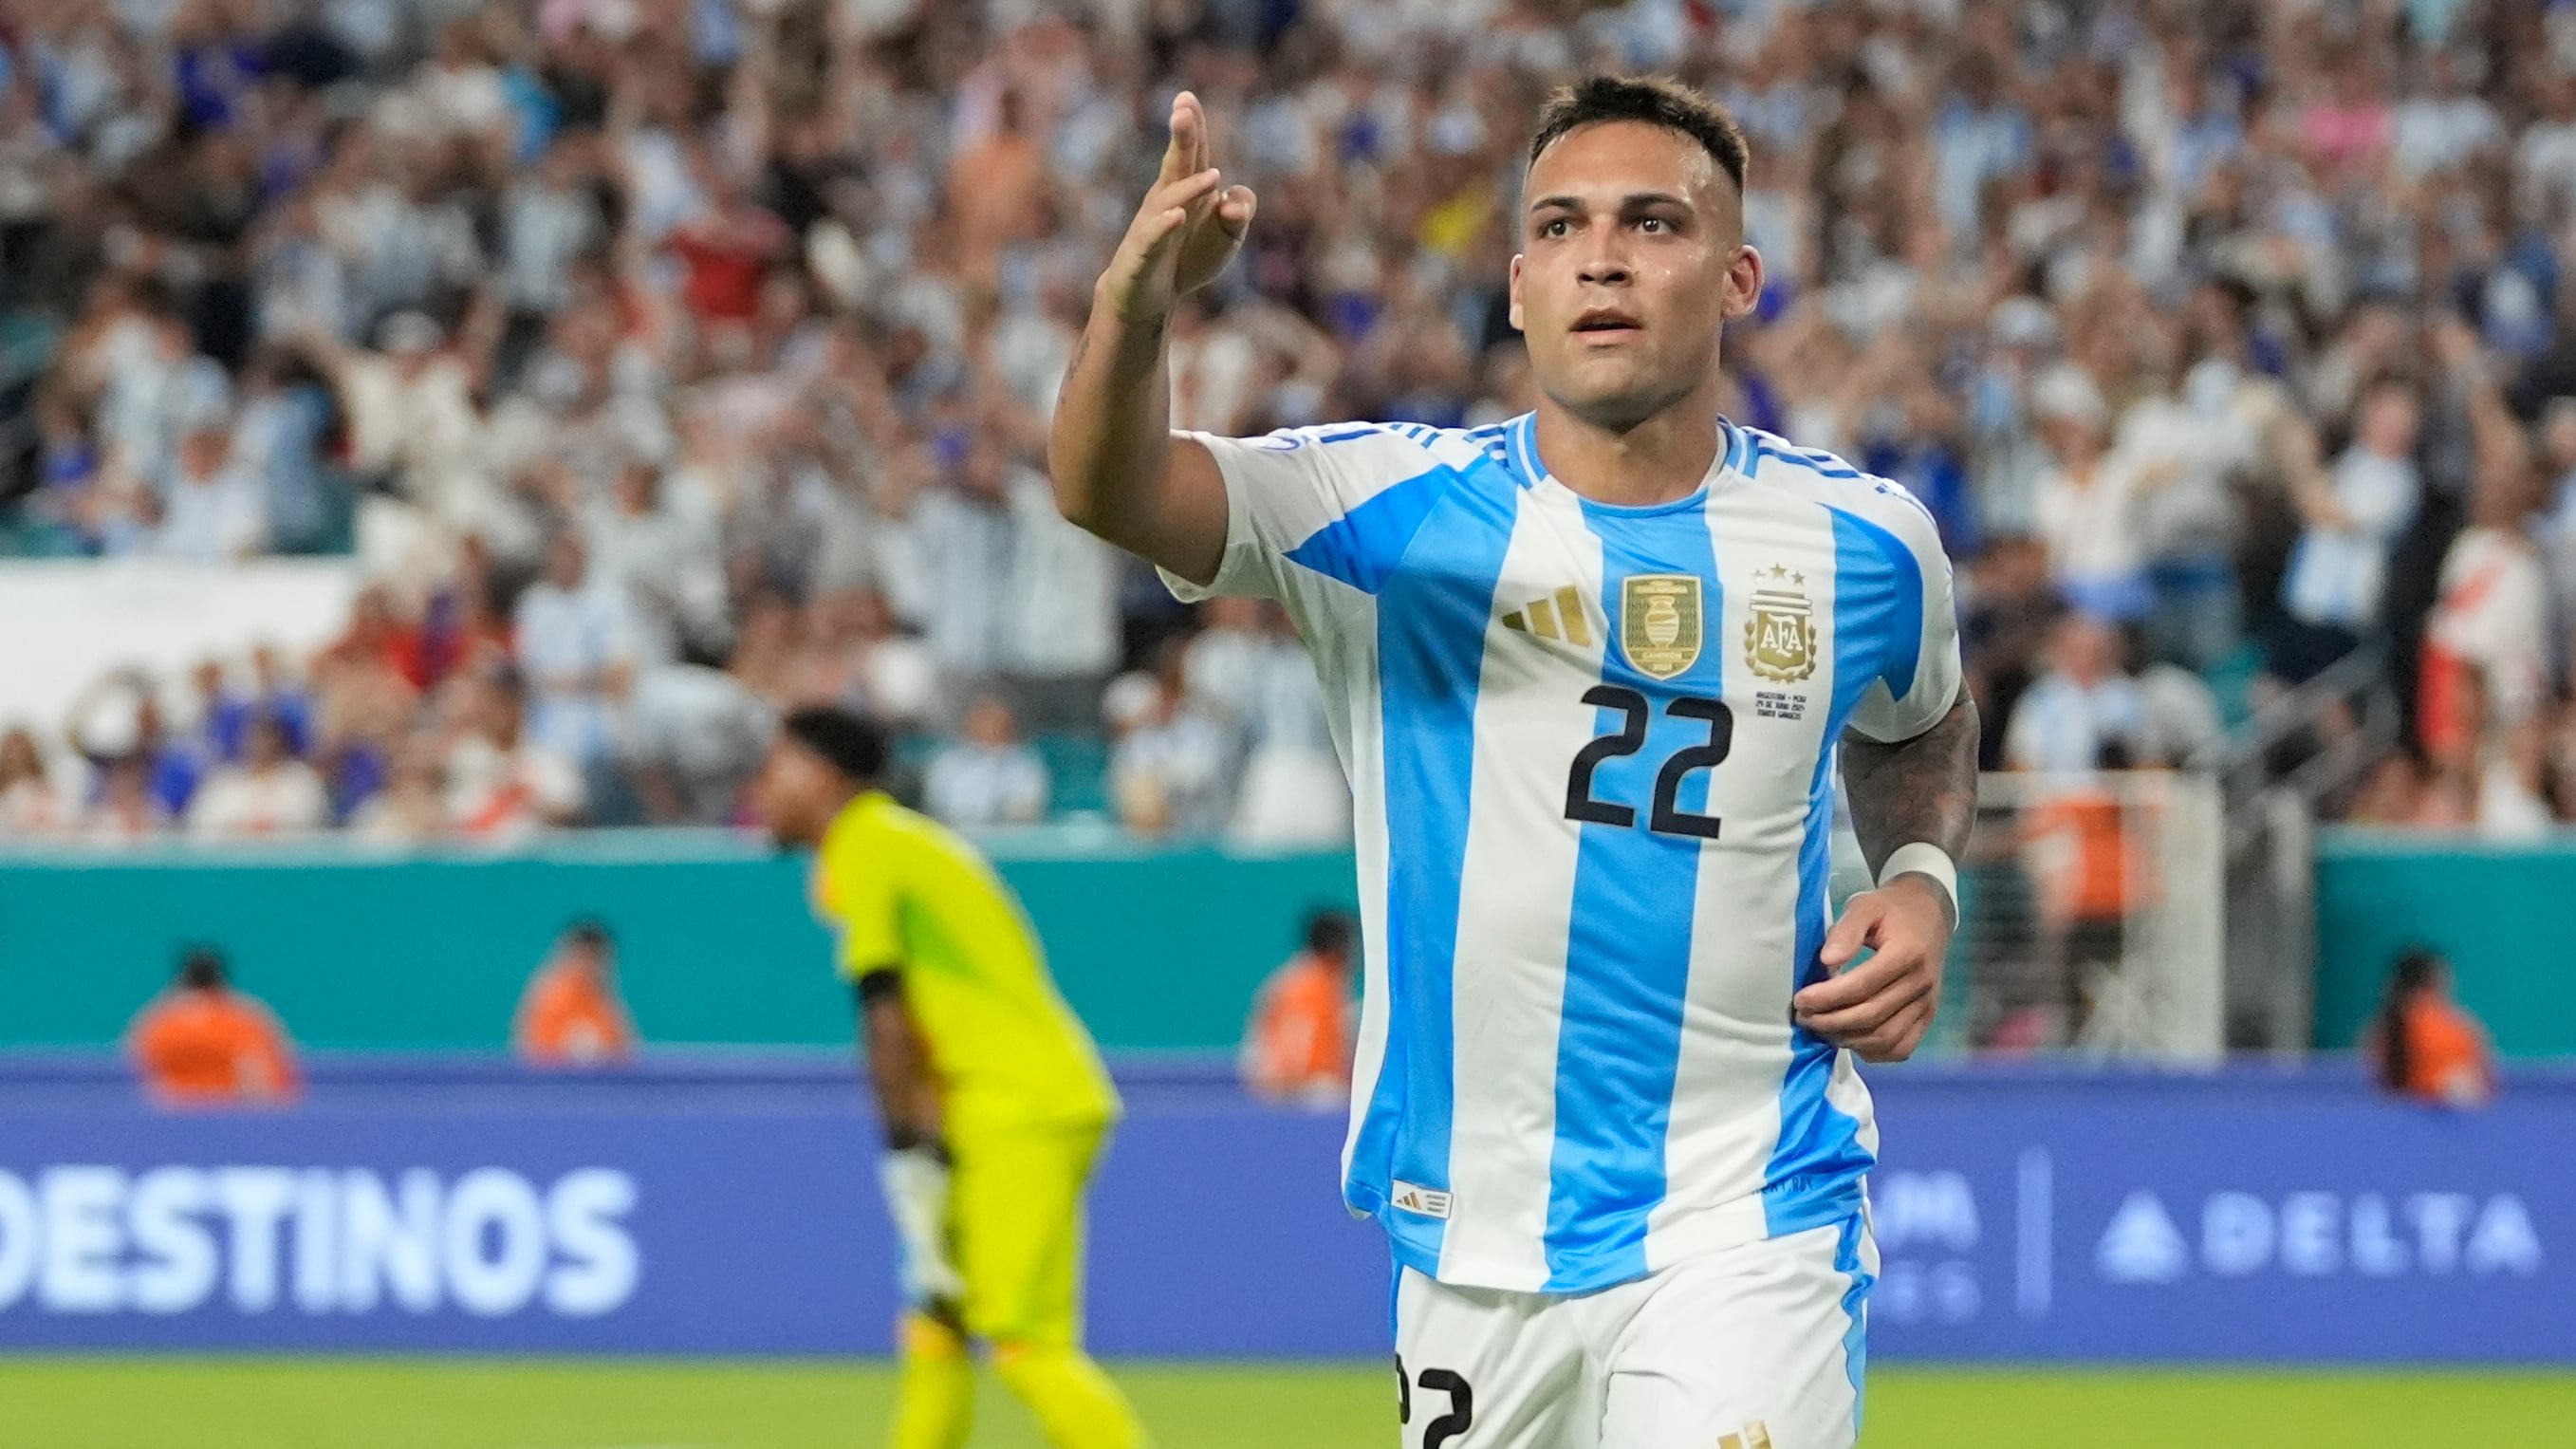 Argentina’s Lautaro Martínez (22) celebrates scoring his side’s second goal against Peru (Lynne Sladky/AP)